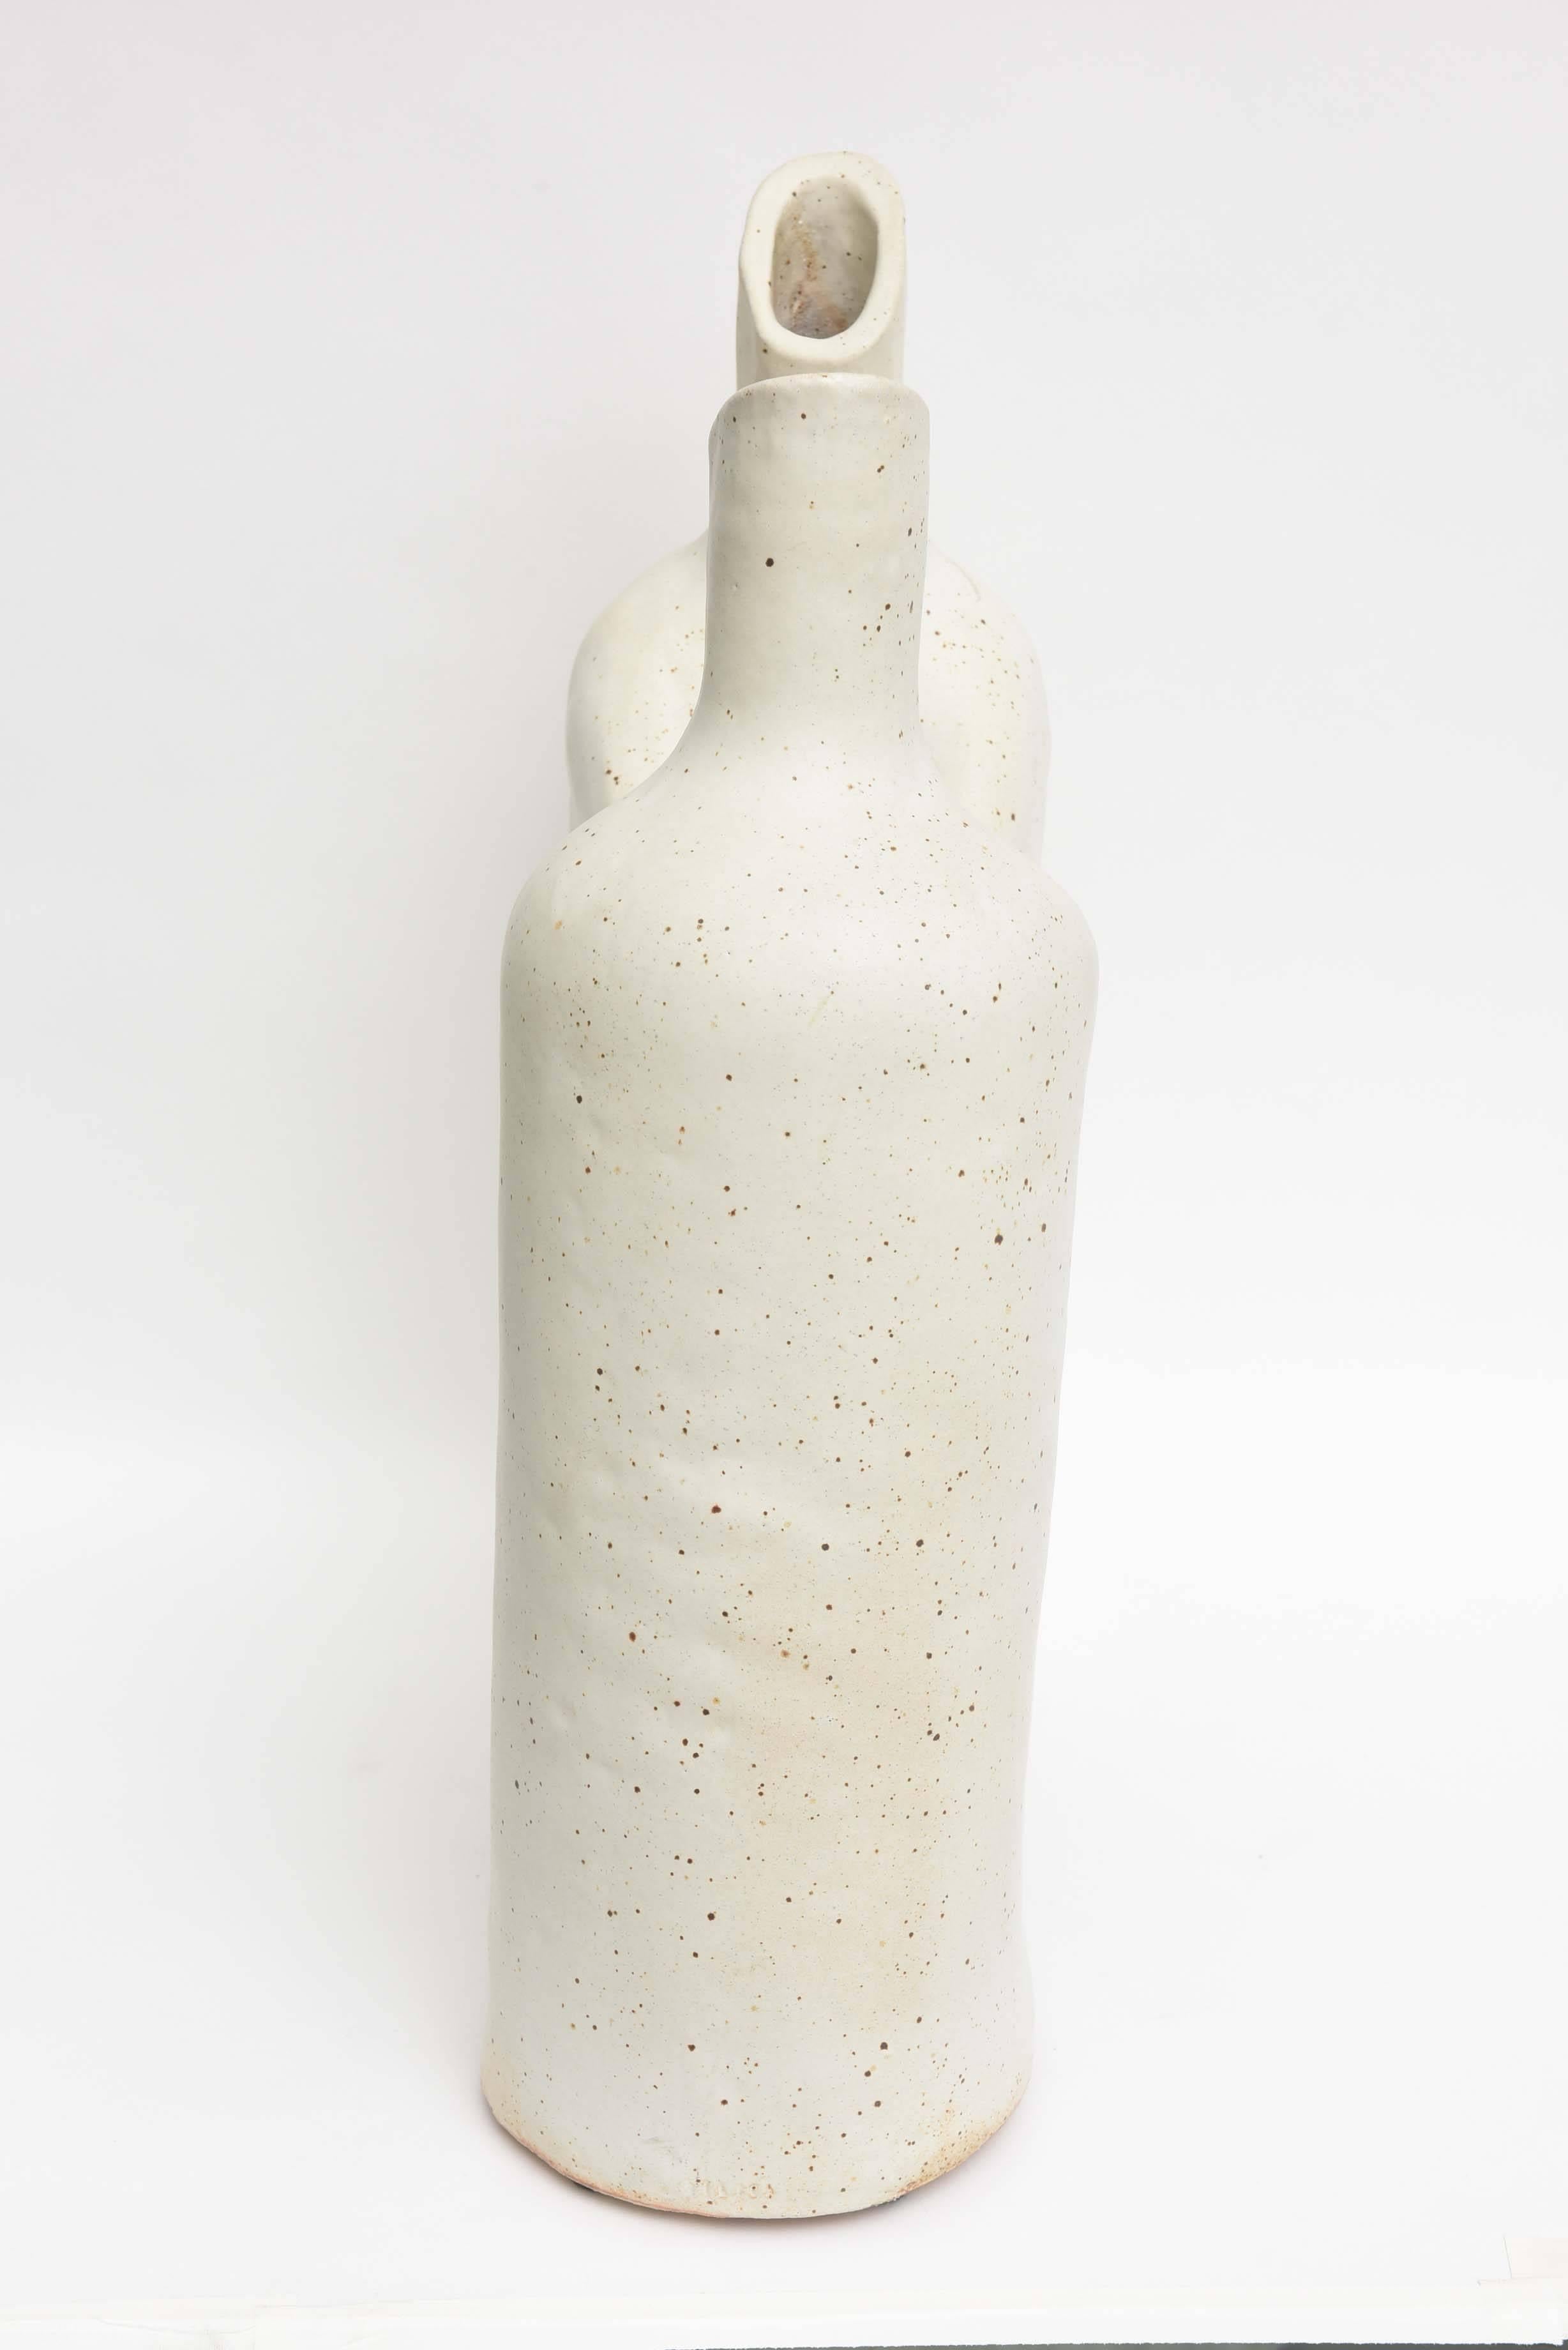 American Modern Ceramic Vase/ Sculpture, Daric Harvie 2